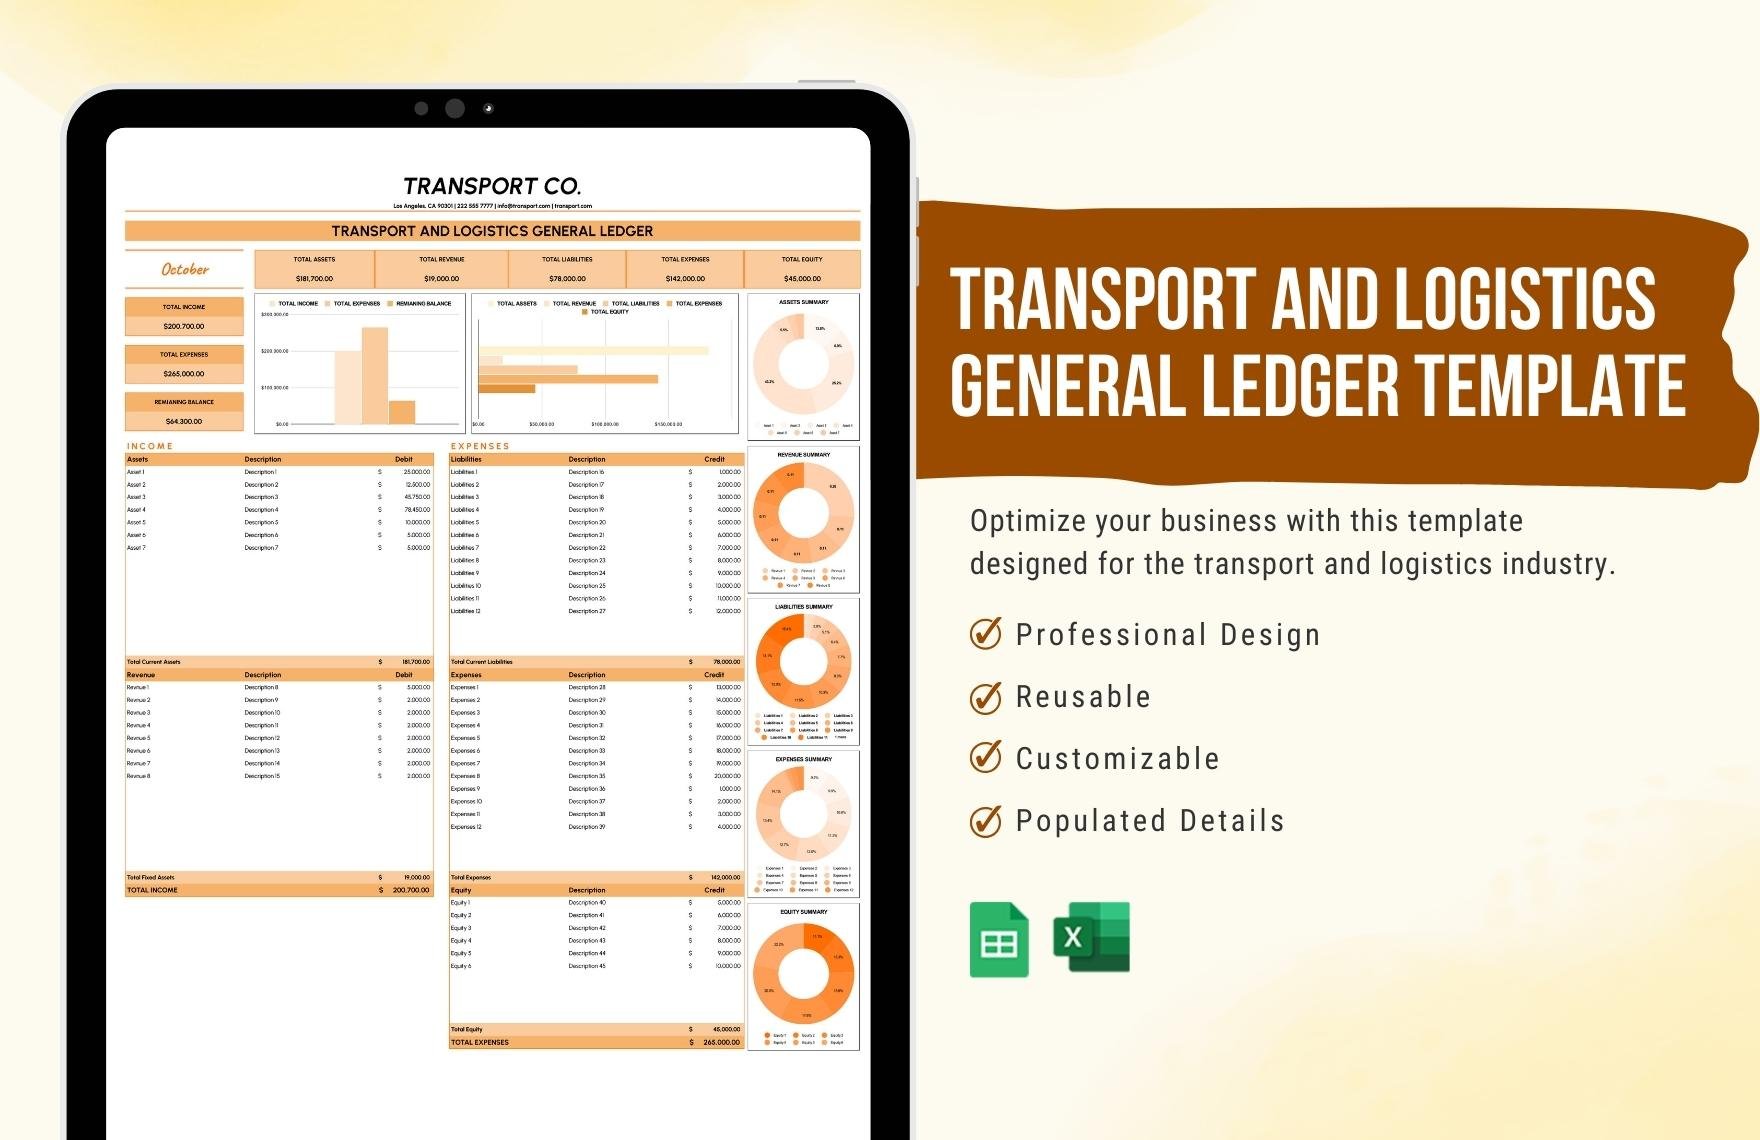 Transport and Logistics General Ledger Template